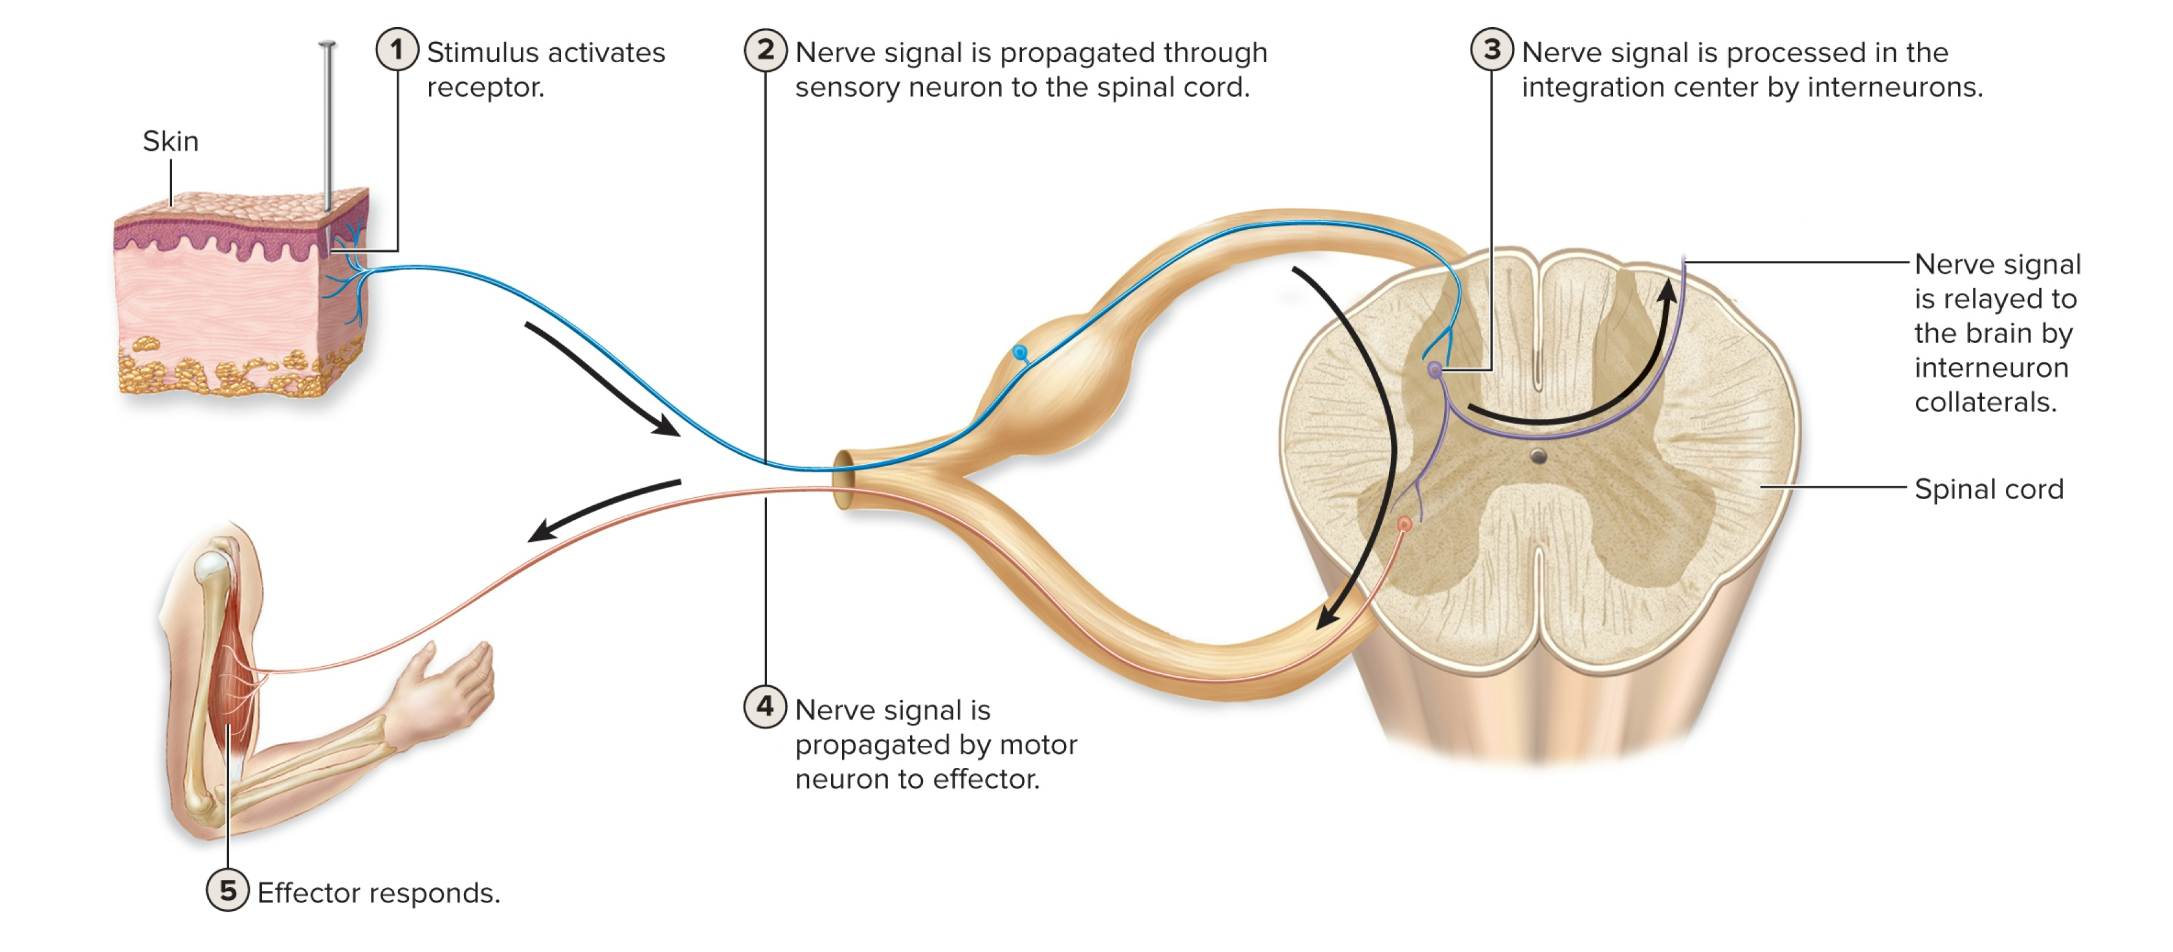 <ol><li><p>stimulus activates receptor</p></li><li><p>Nerve signal is propagated through sensory neuron to the spinal cord</p></li><li><p>Nerve signal is processed in the integration center by interneurons</p></li><li><p>Nerve signal is propagated by motor neuron to effector</p></li><li><p>Effector responds</p></li></ol>